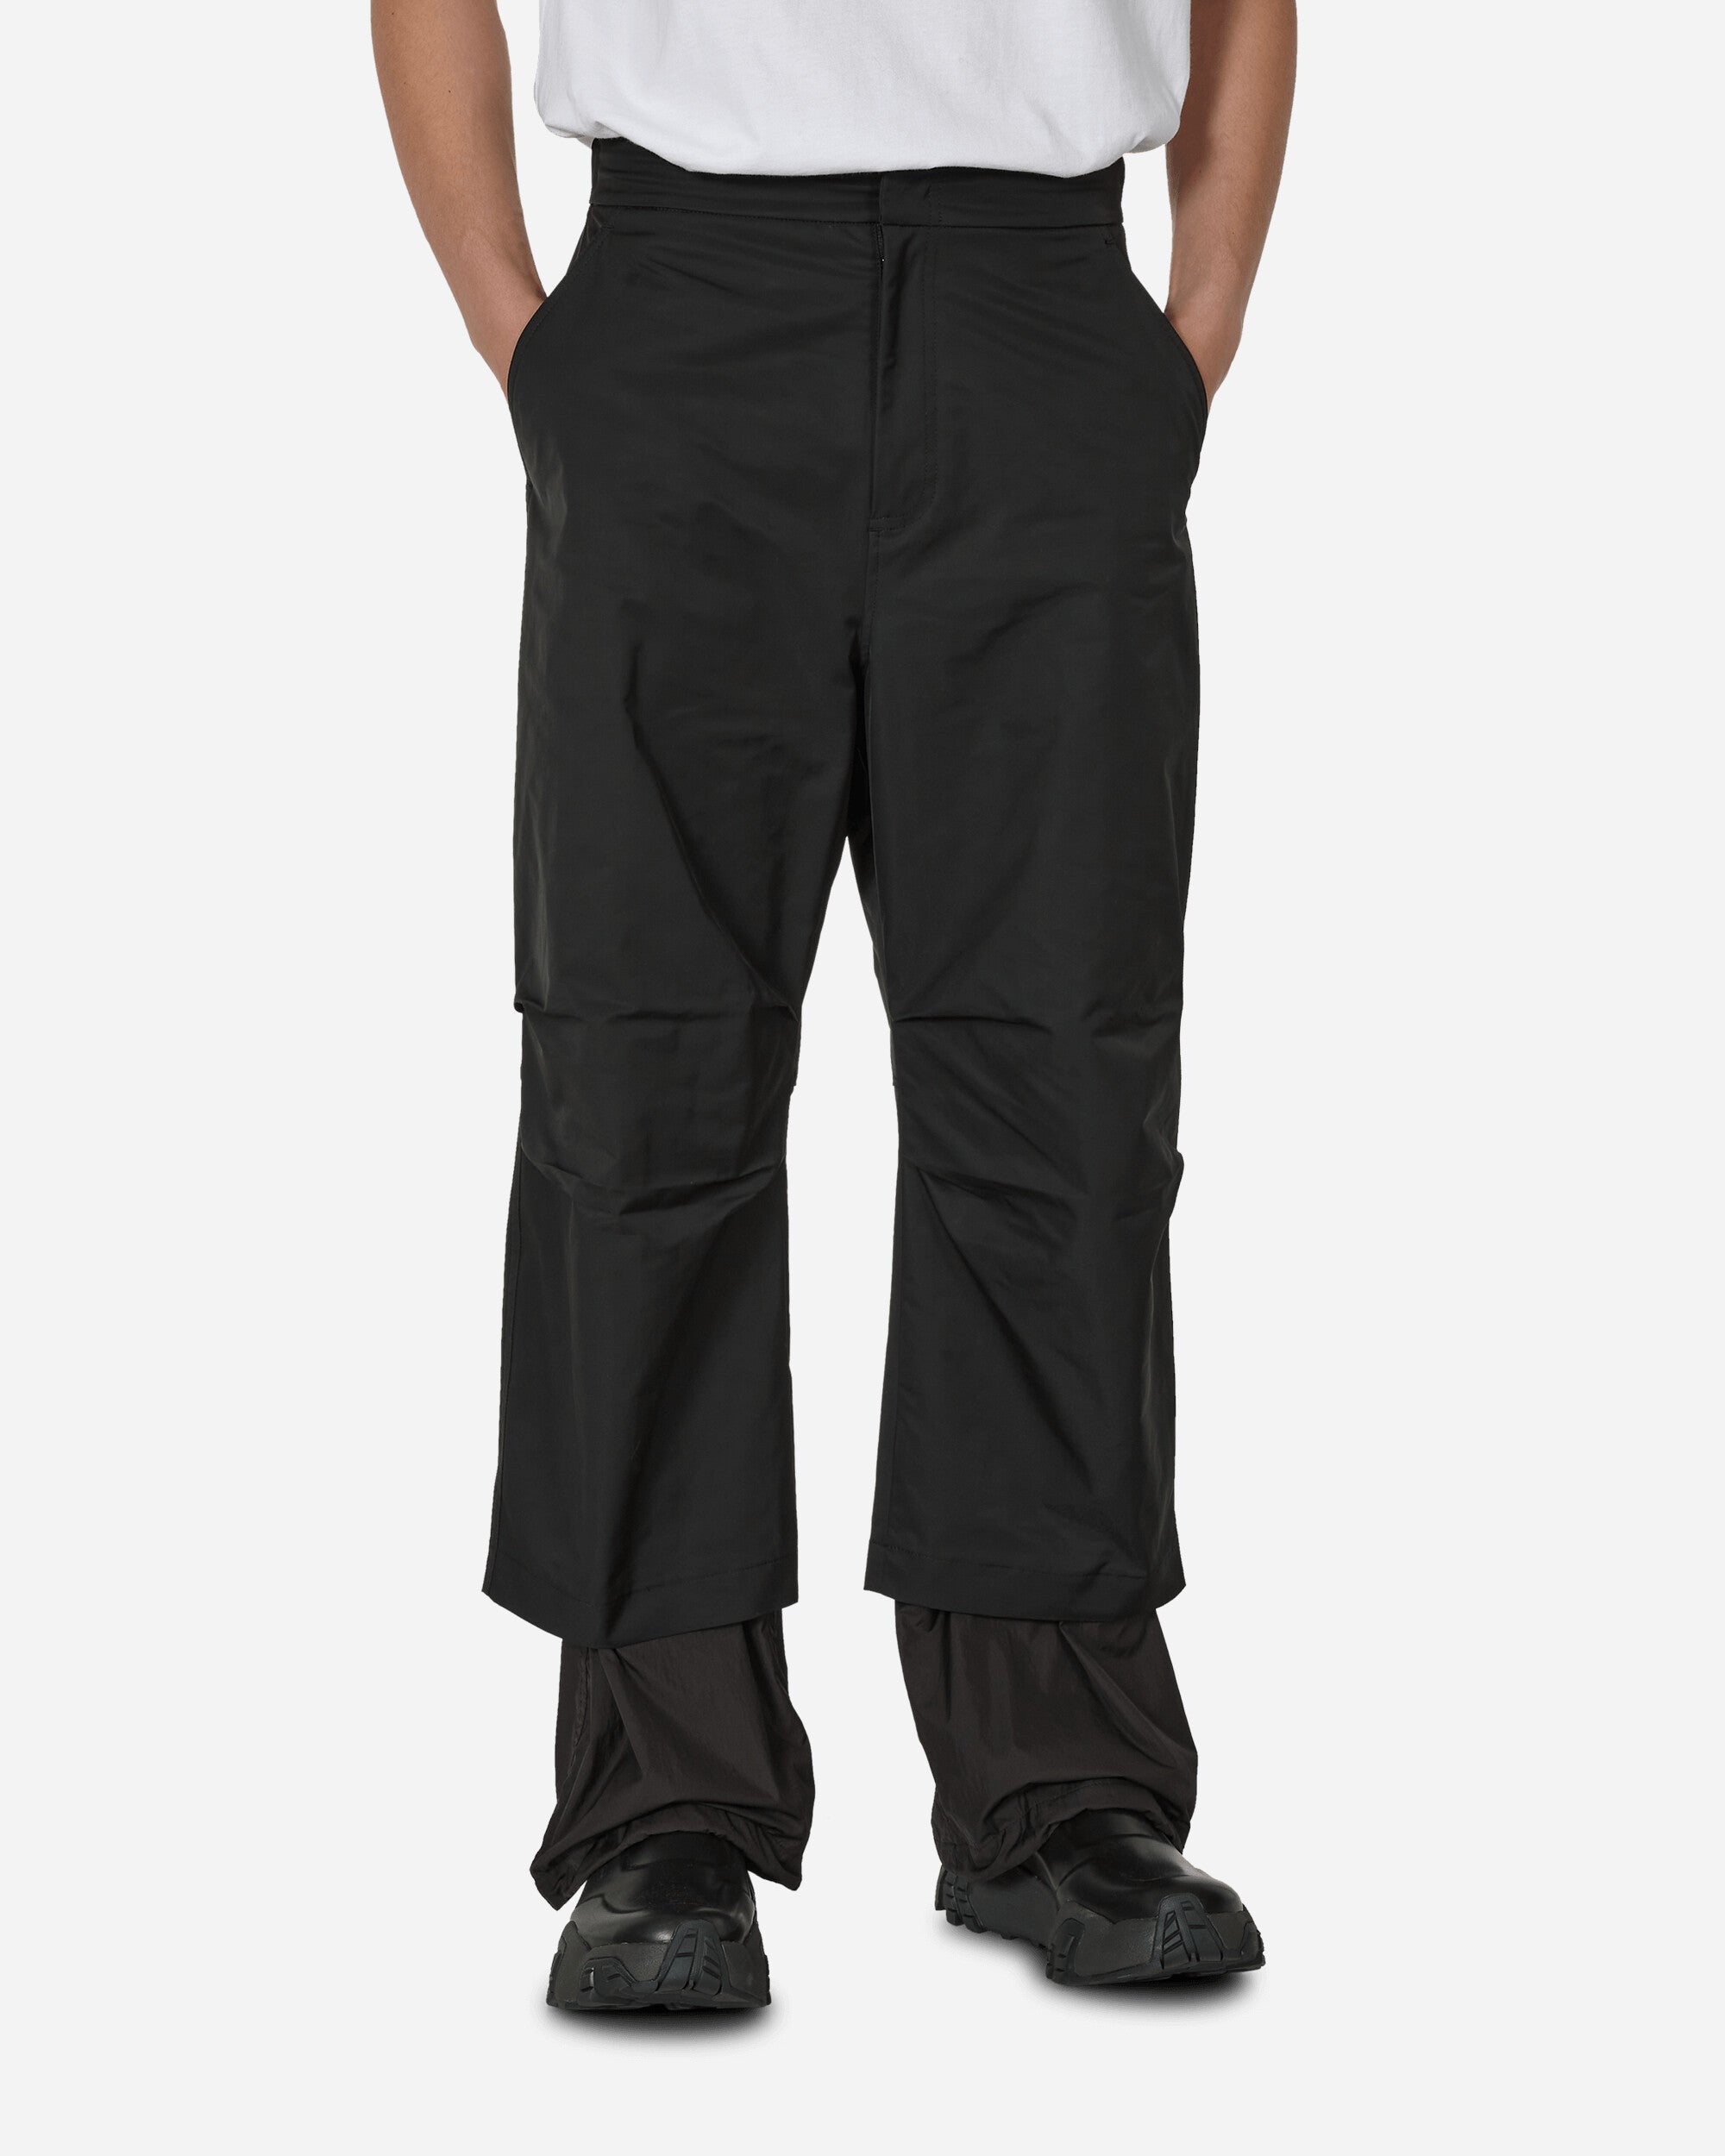 AMOMENTO Nylon Double Layered Pants Black - Slam Jam® Official Store